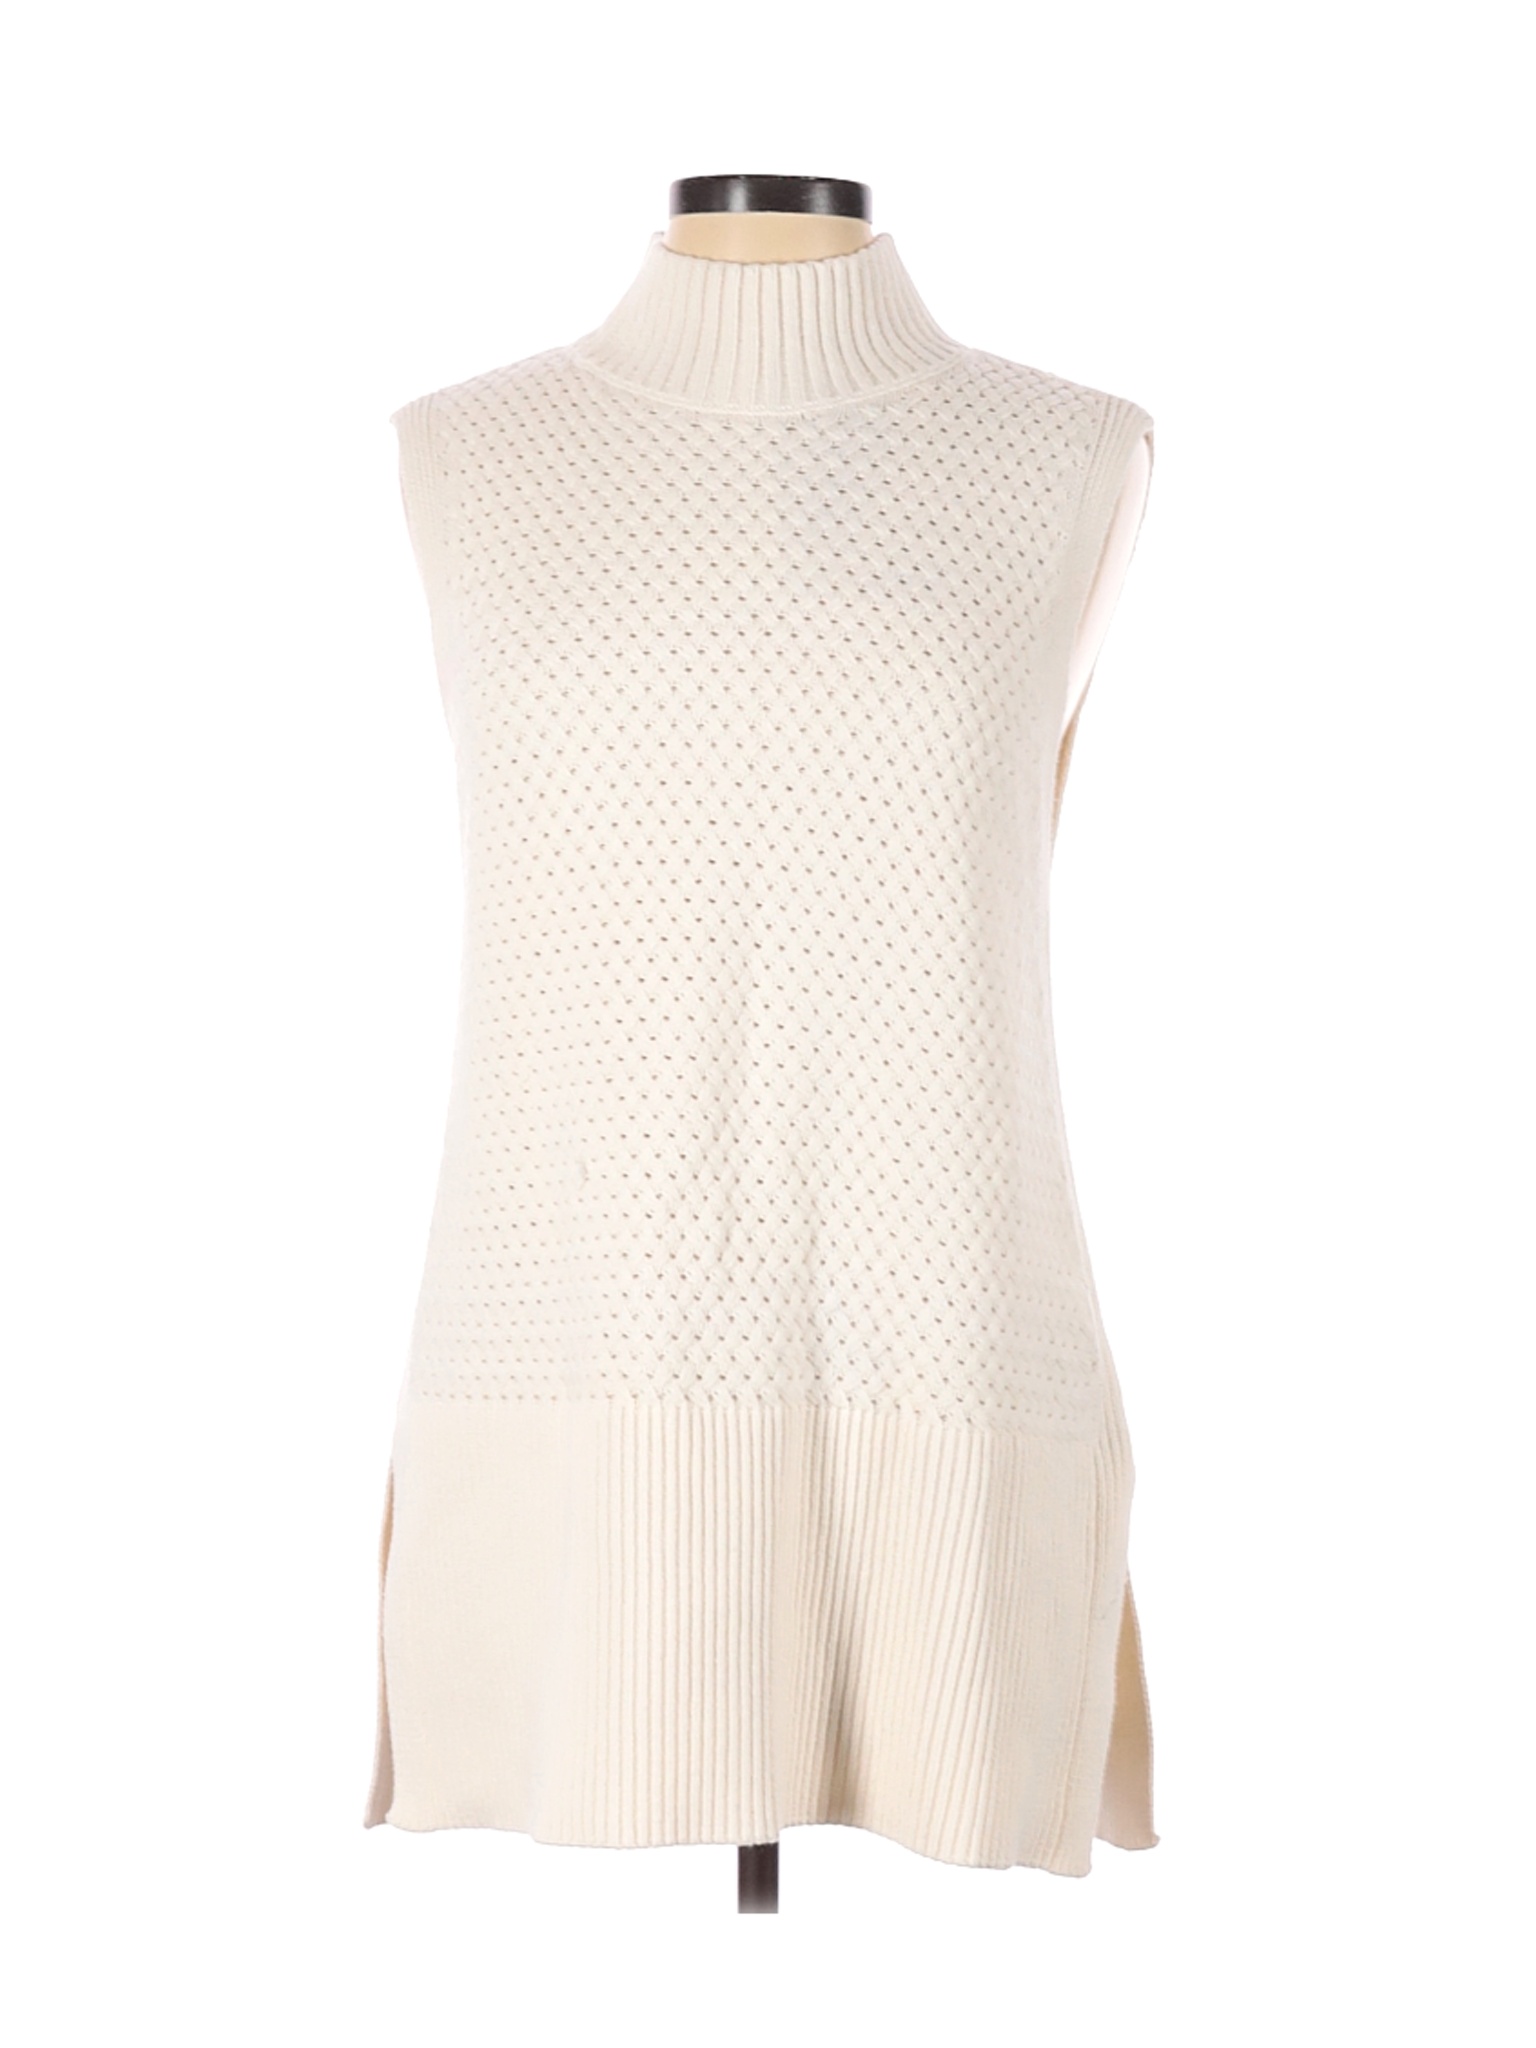 White House Black Market Women Ivory Pullover Sweater L | eBay